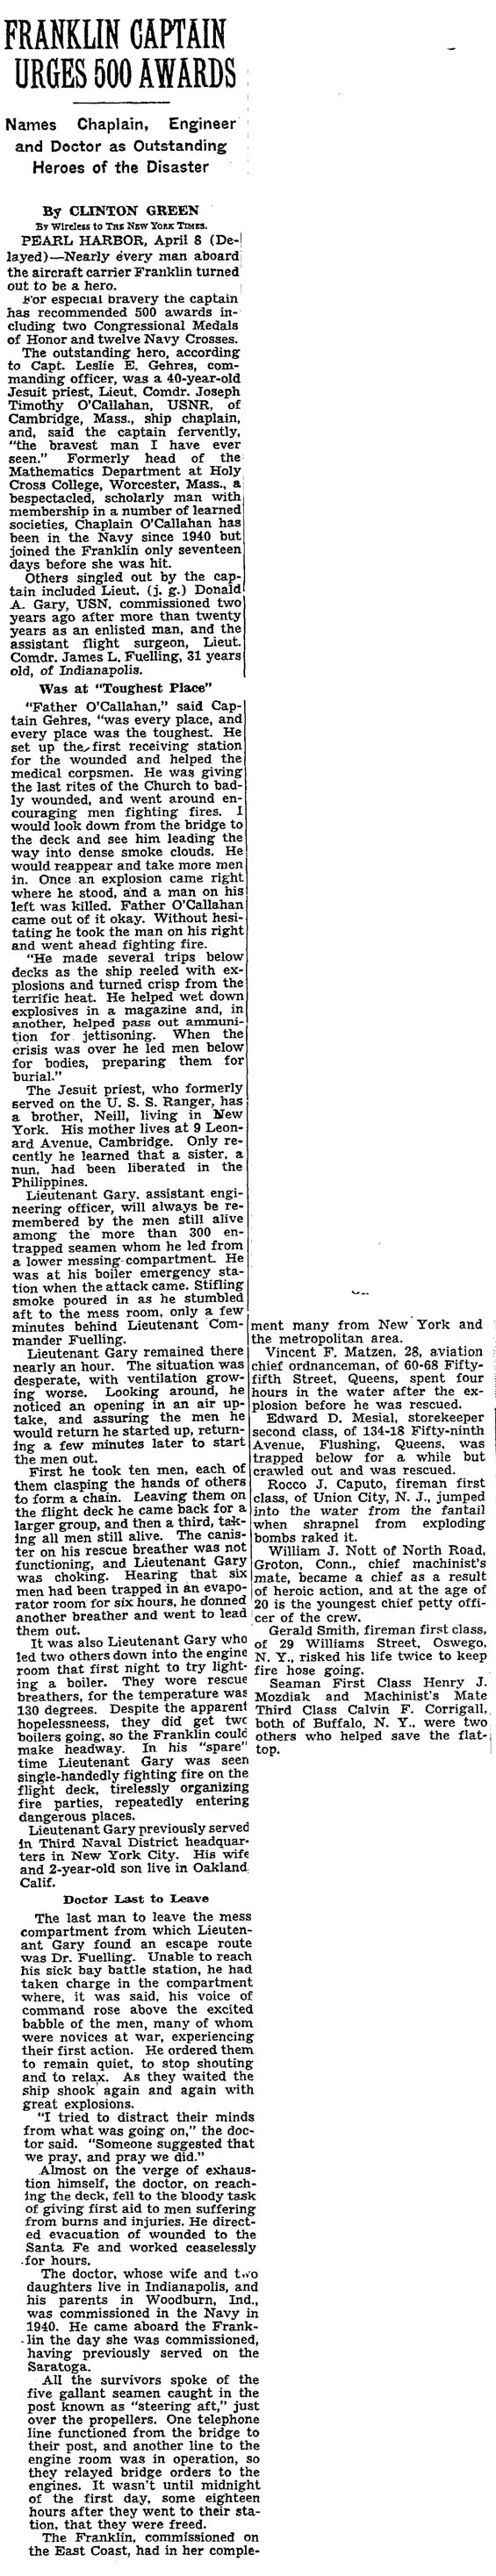 The New York Times, May 18, 1945 (Source: NYT via Bob Woodling)